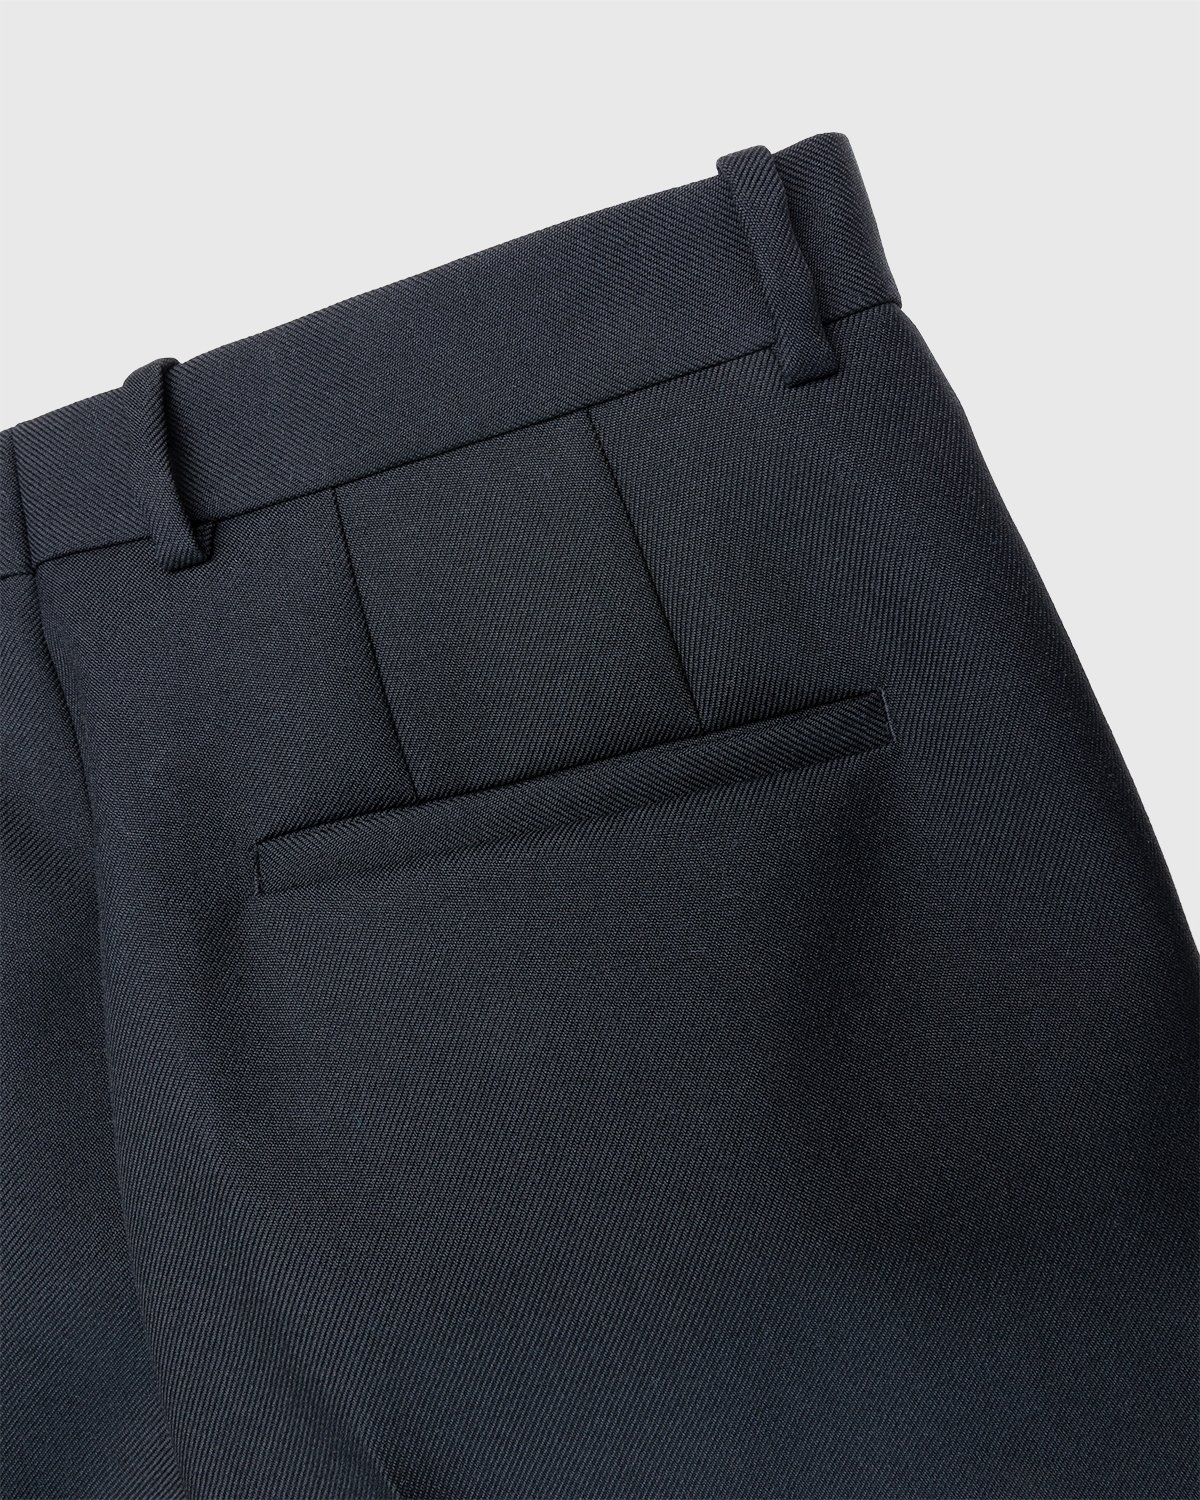 Jil Sander - Zip Pocket Trousers Black - Clothing - Black - Image 3